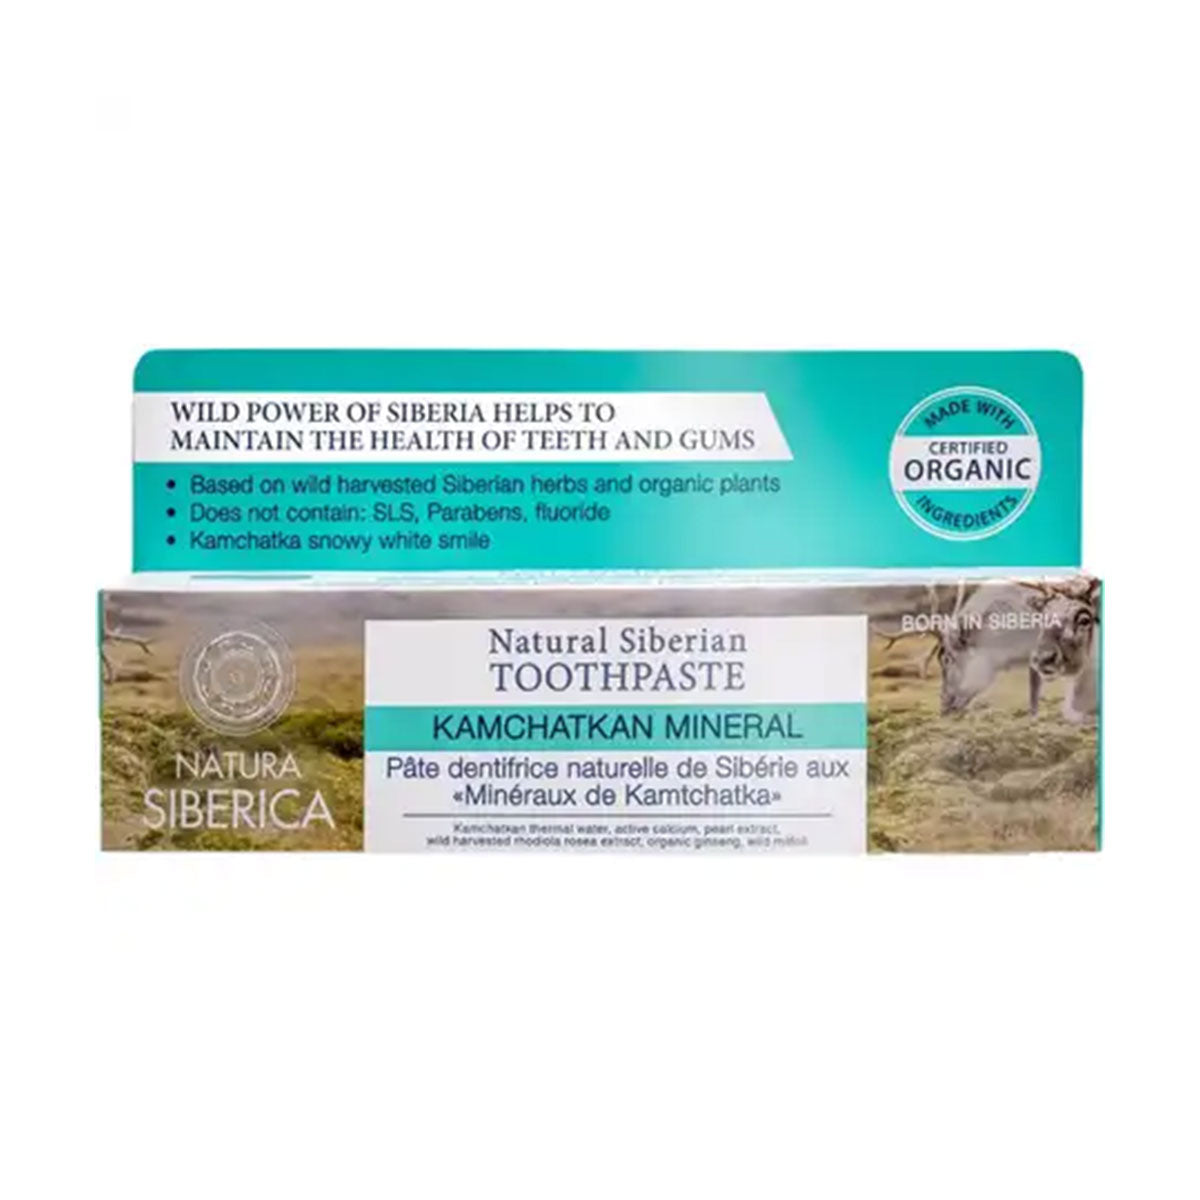 Pasta Dental Mineral Kamchatkan Natura Siberica 100 gr 🍃 Producto Ecológico